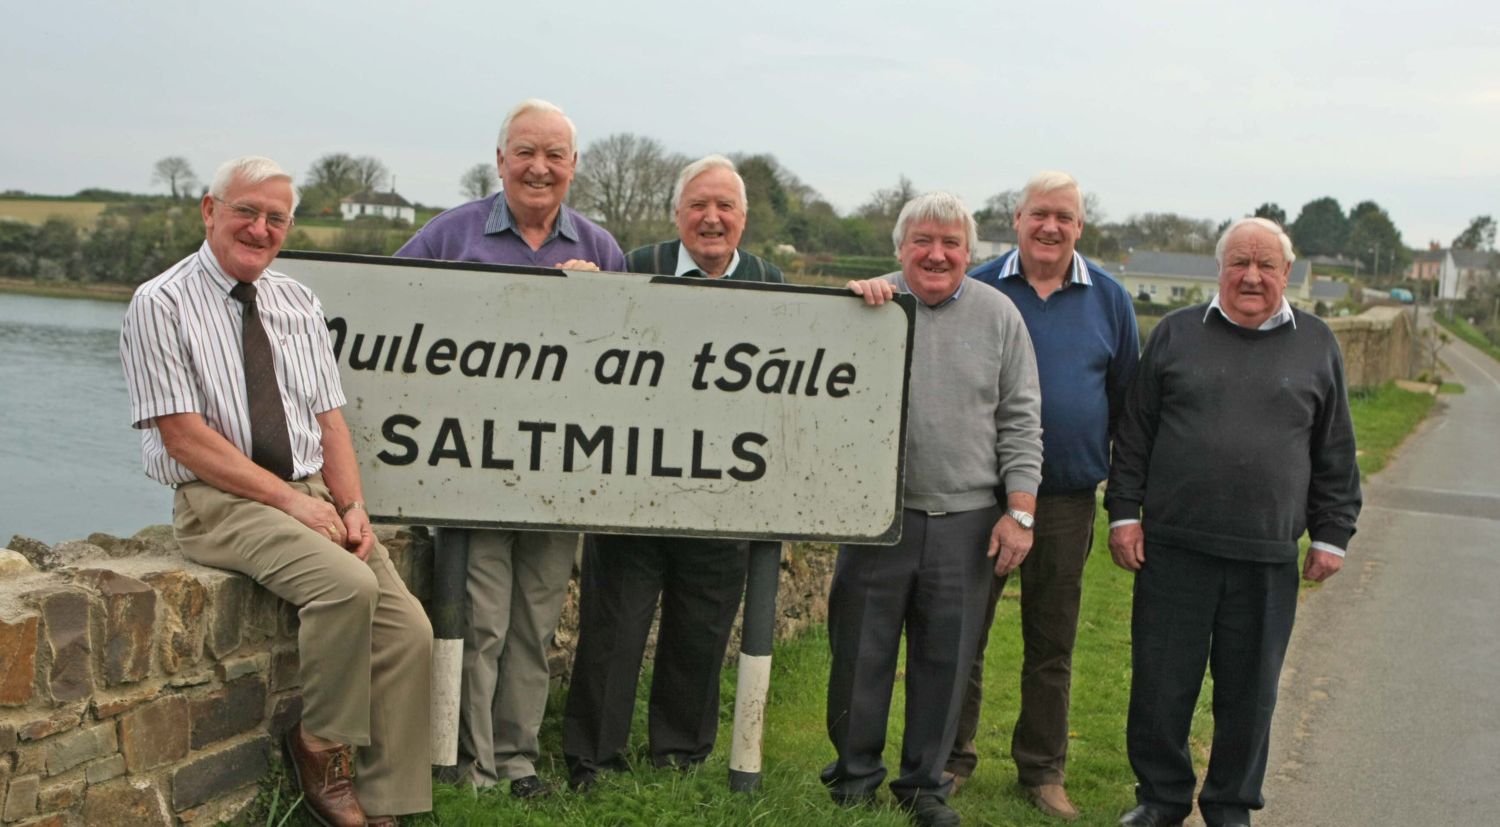 Saltmills – The Norman Way